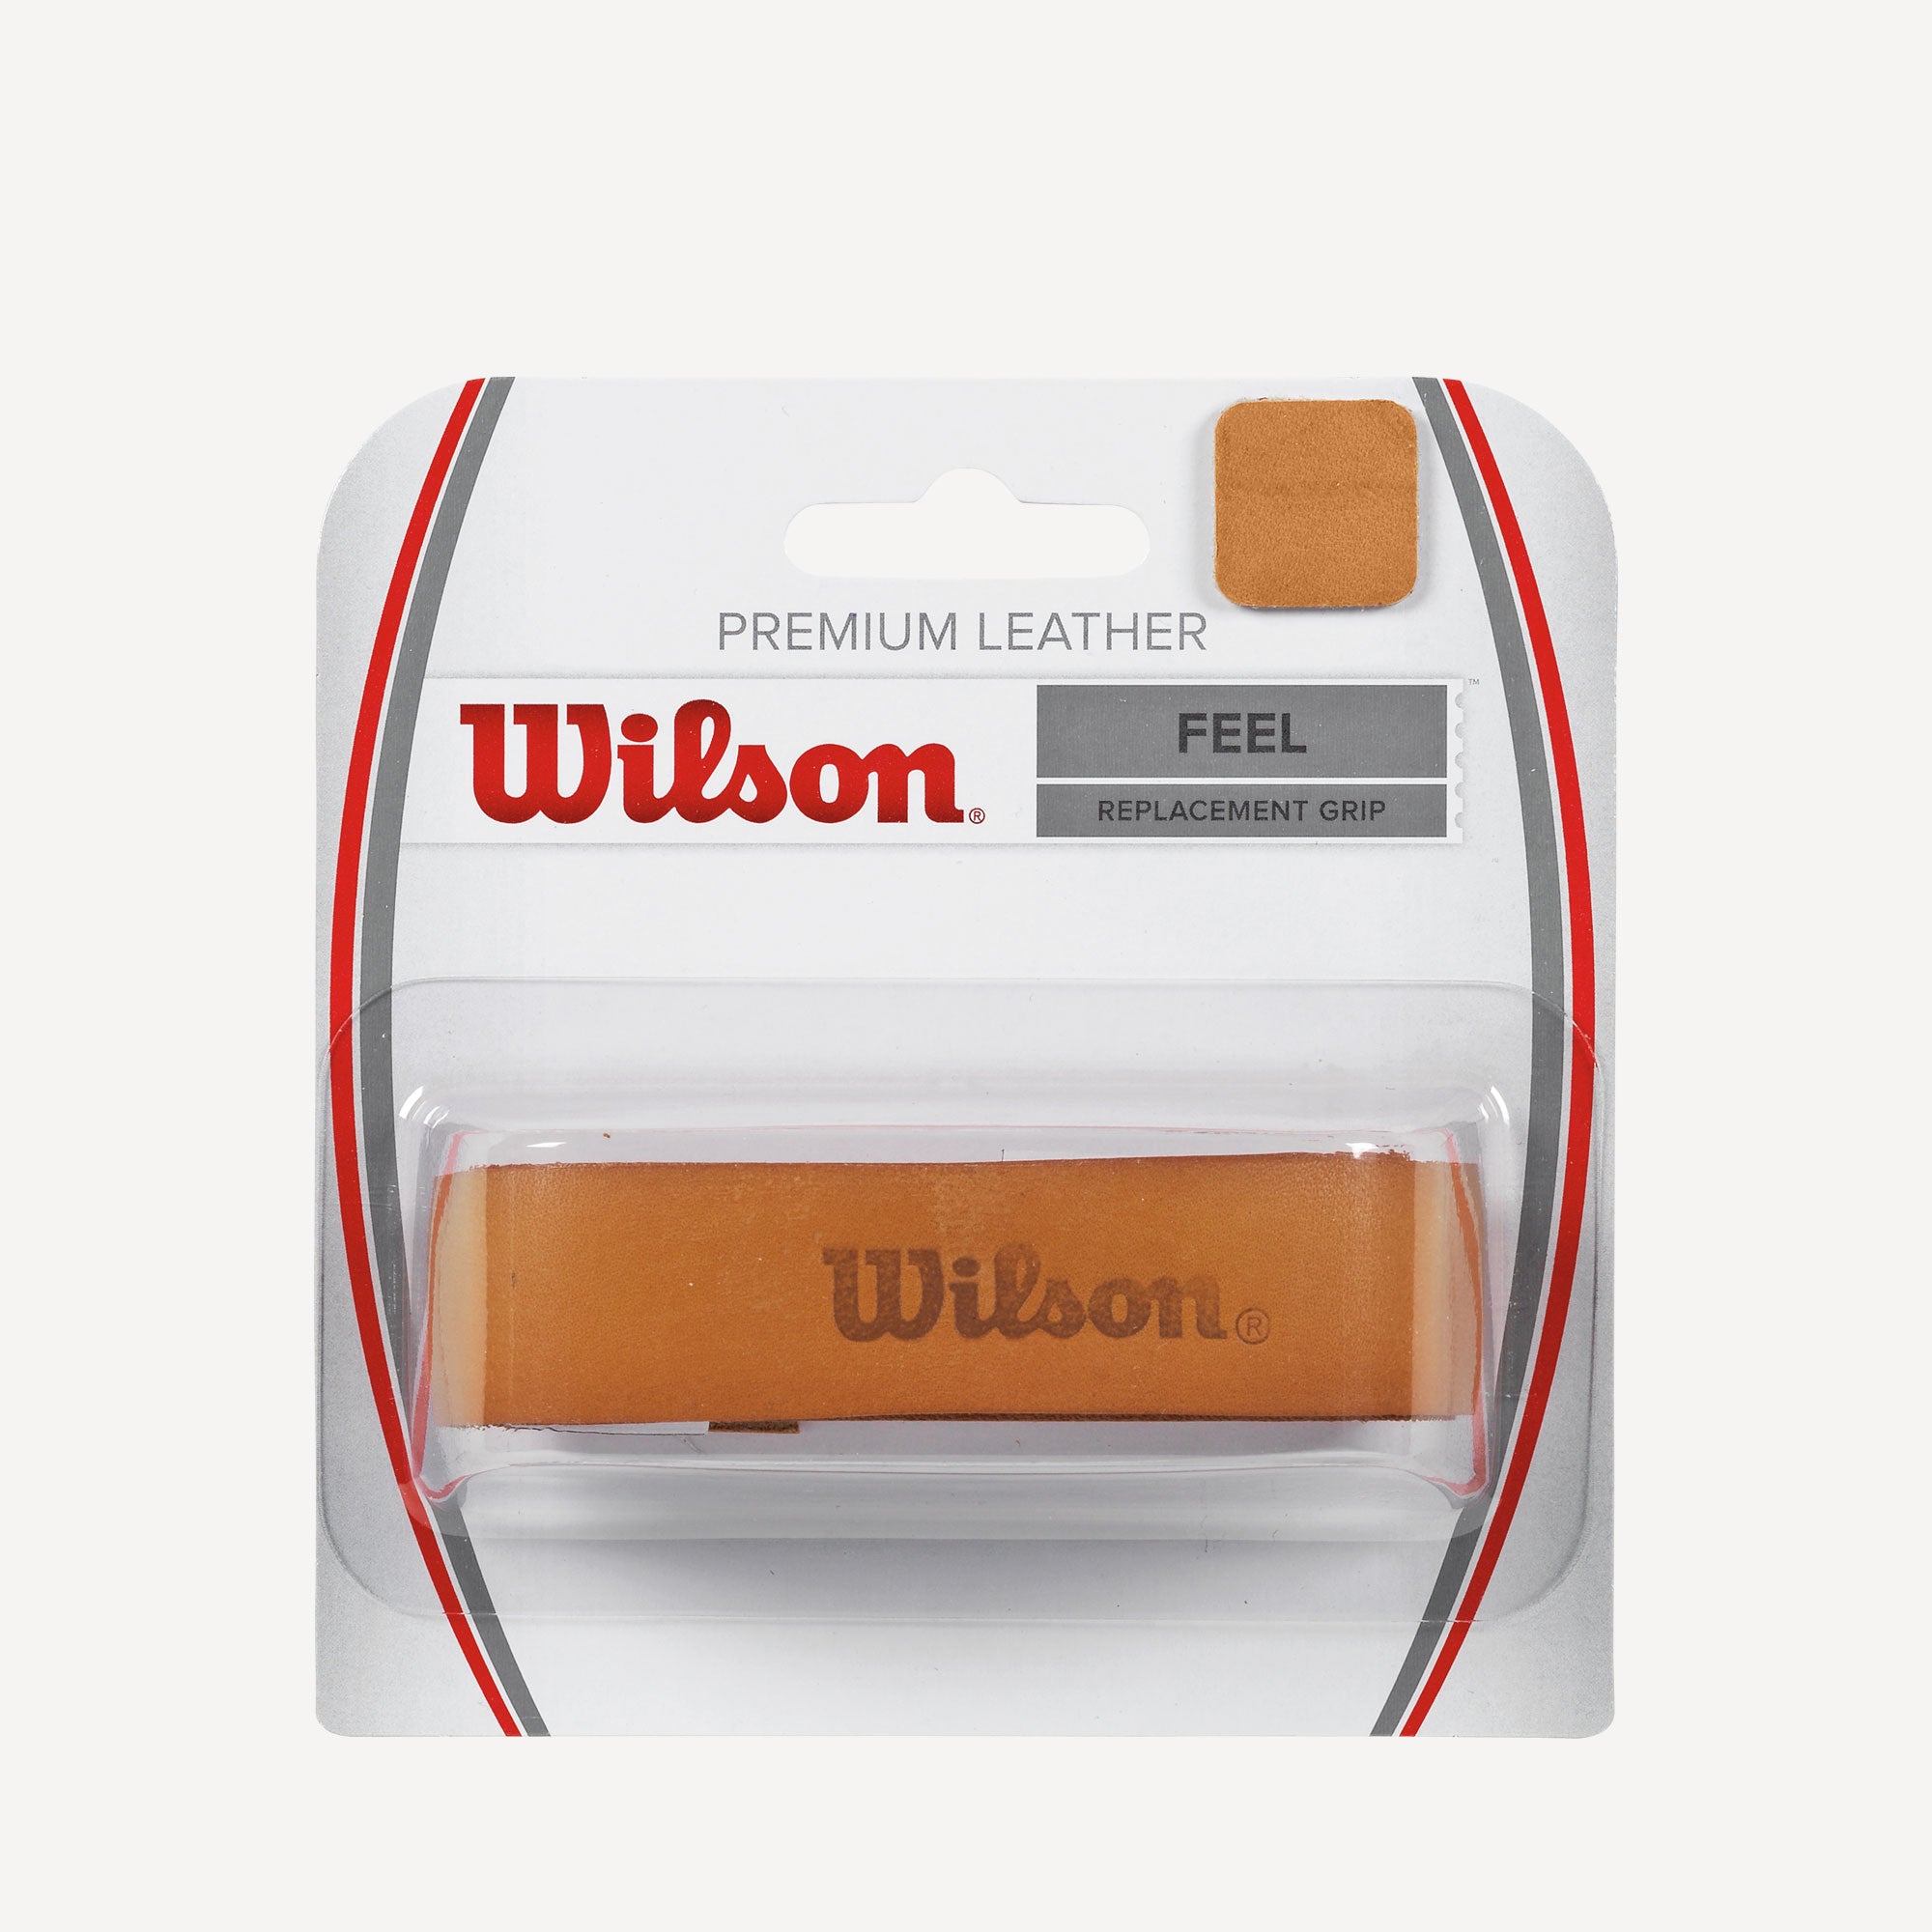 Wilson Premium Leather Tennis Replacement Grip 1